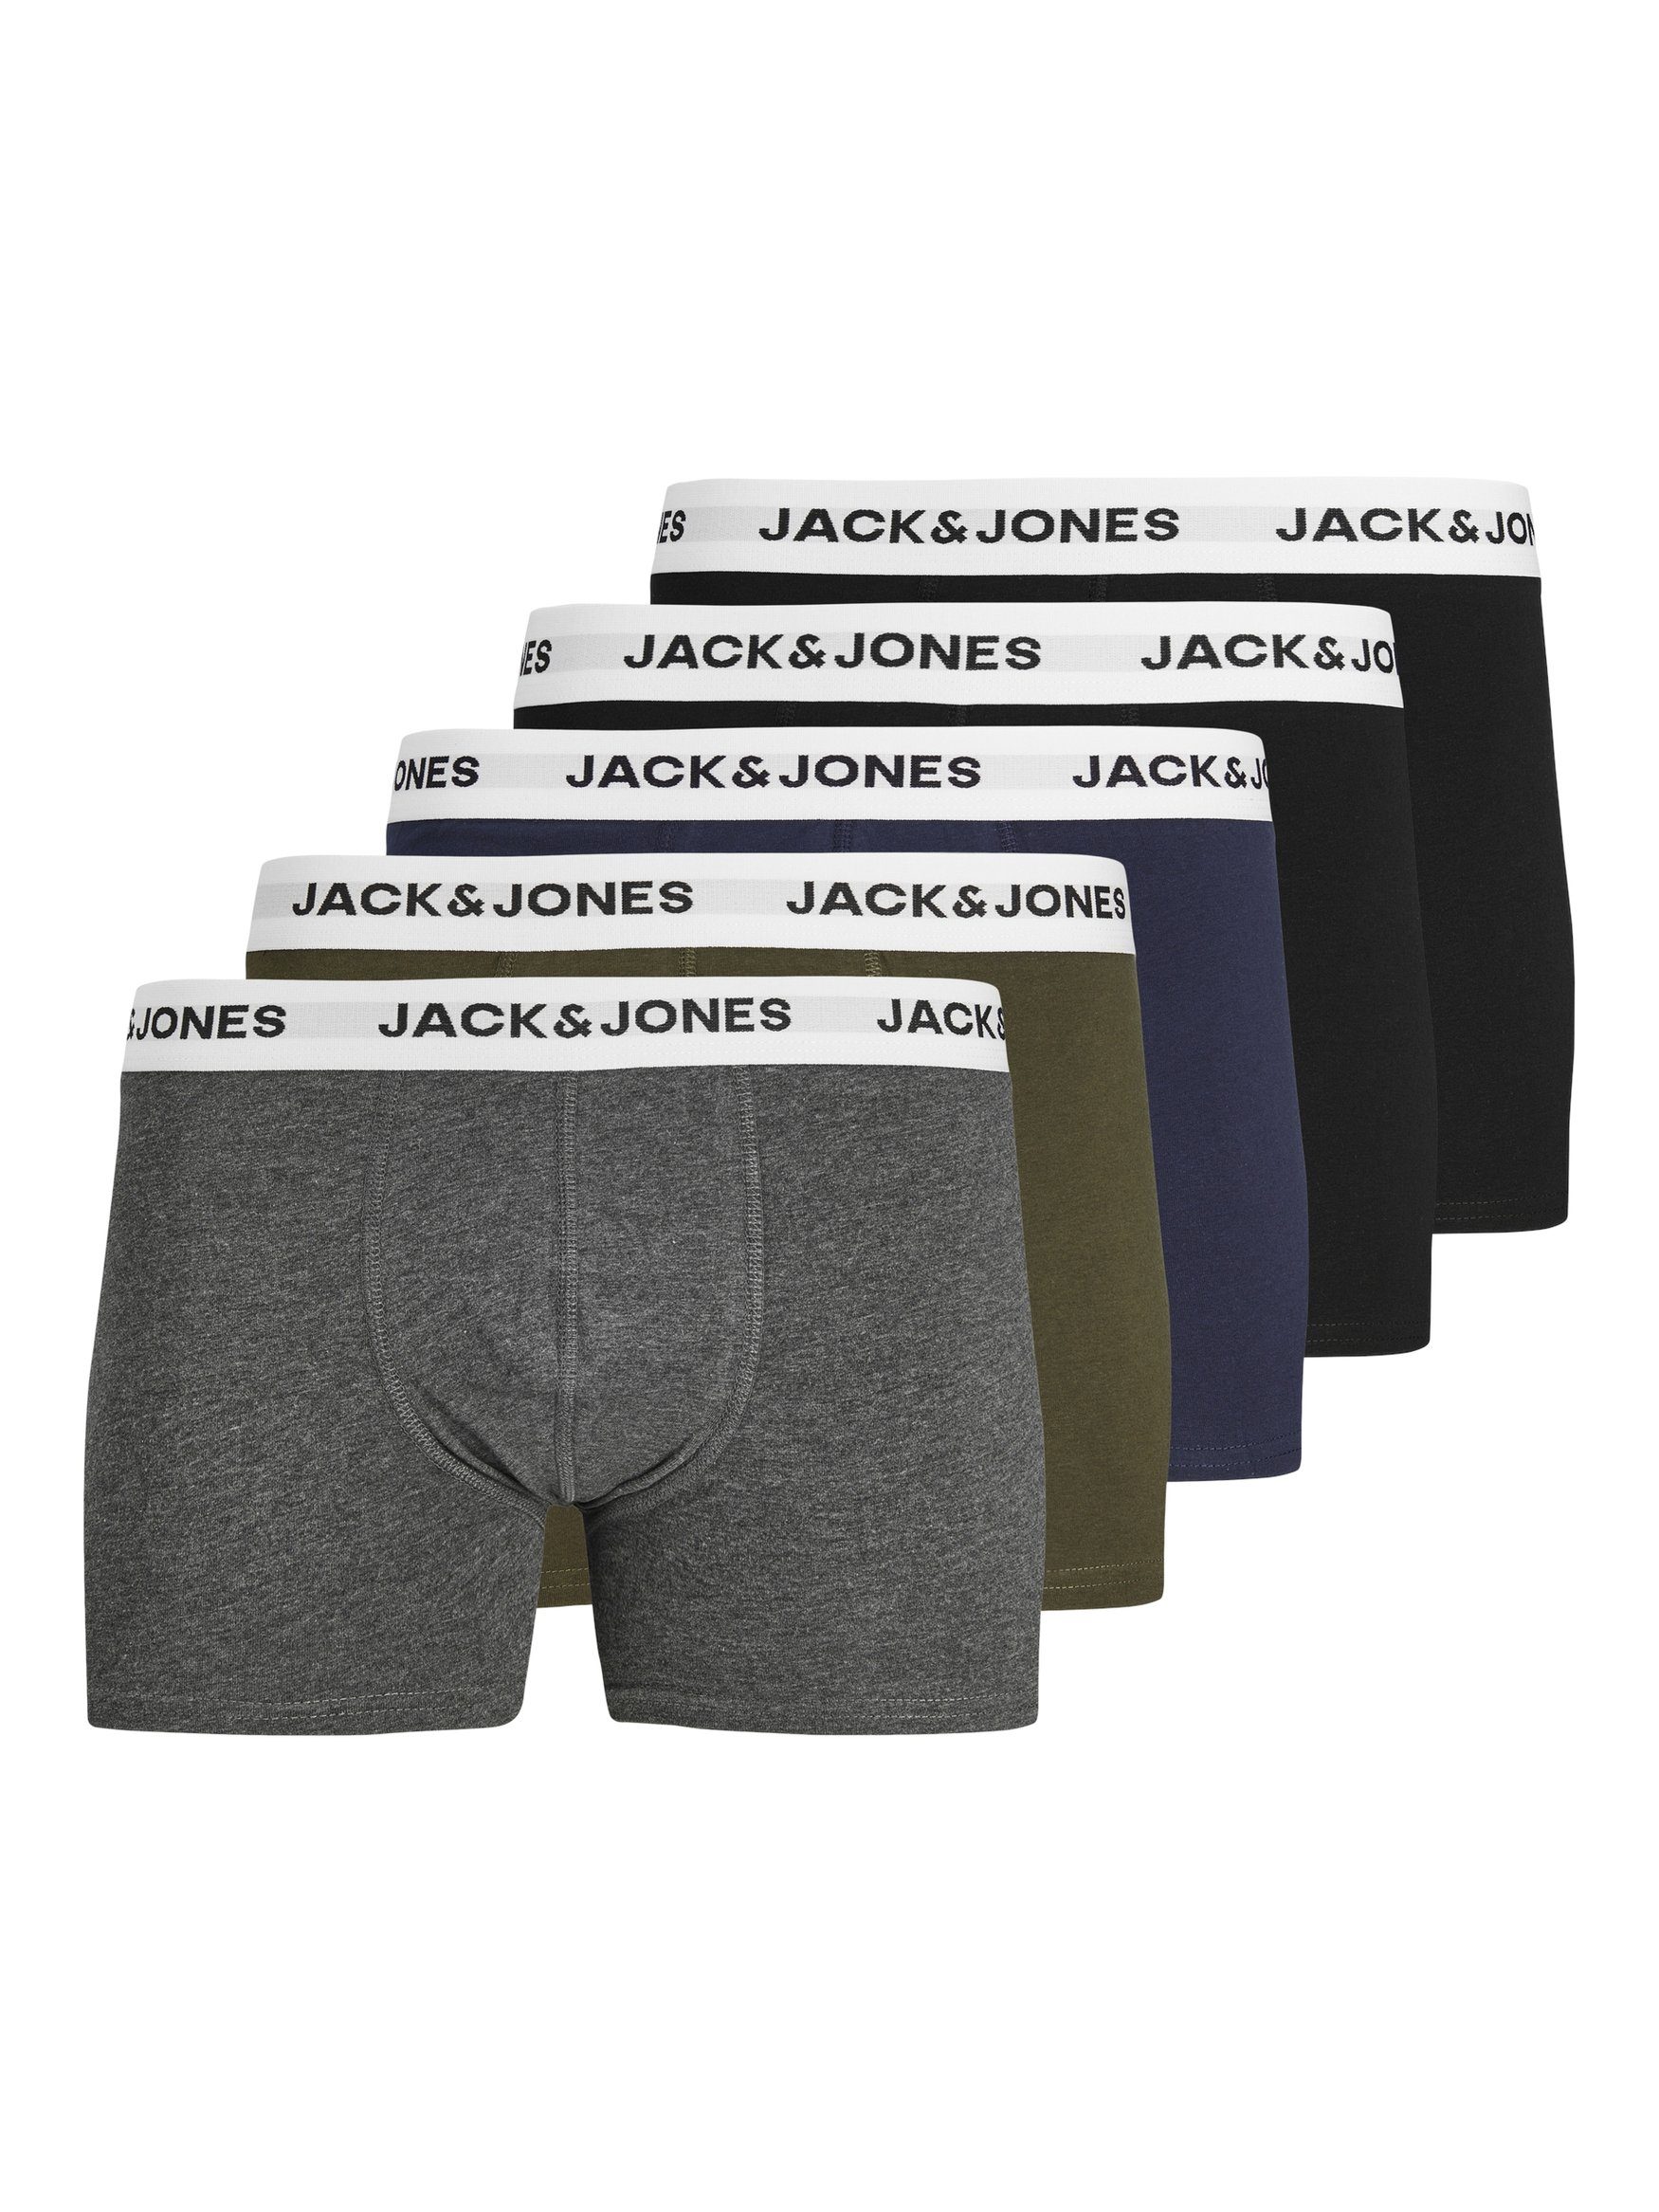 Jack & Jones Boxershorts Boxershorts 5er-Pack Basic Set Trunks Unterhosen JACBASIC (5-St) 6824 in Mehrfarbig forest night/navyblazer/DGM/black/black